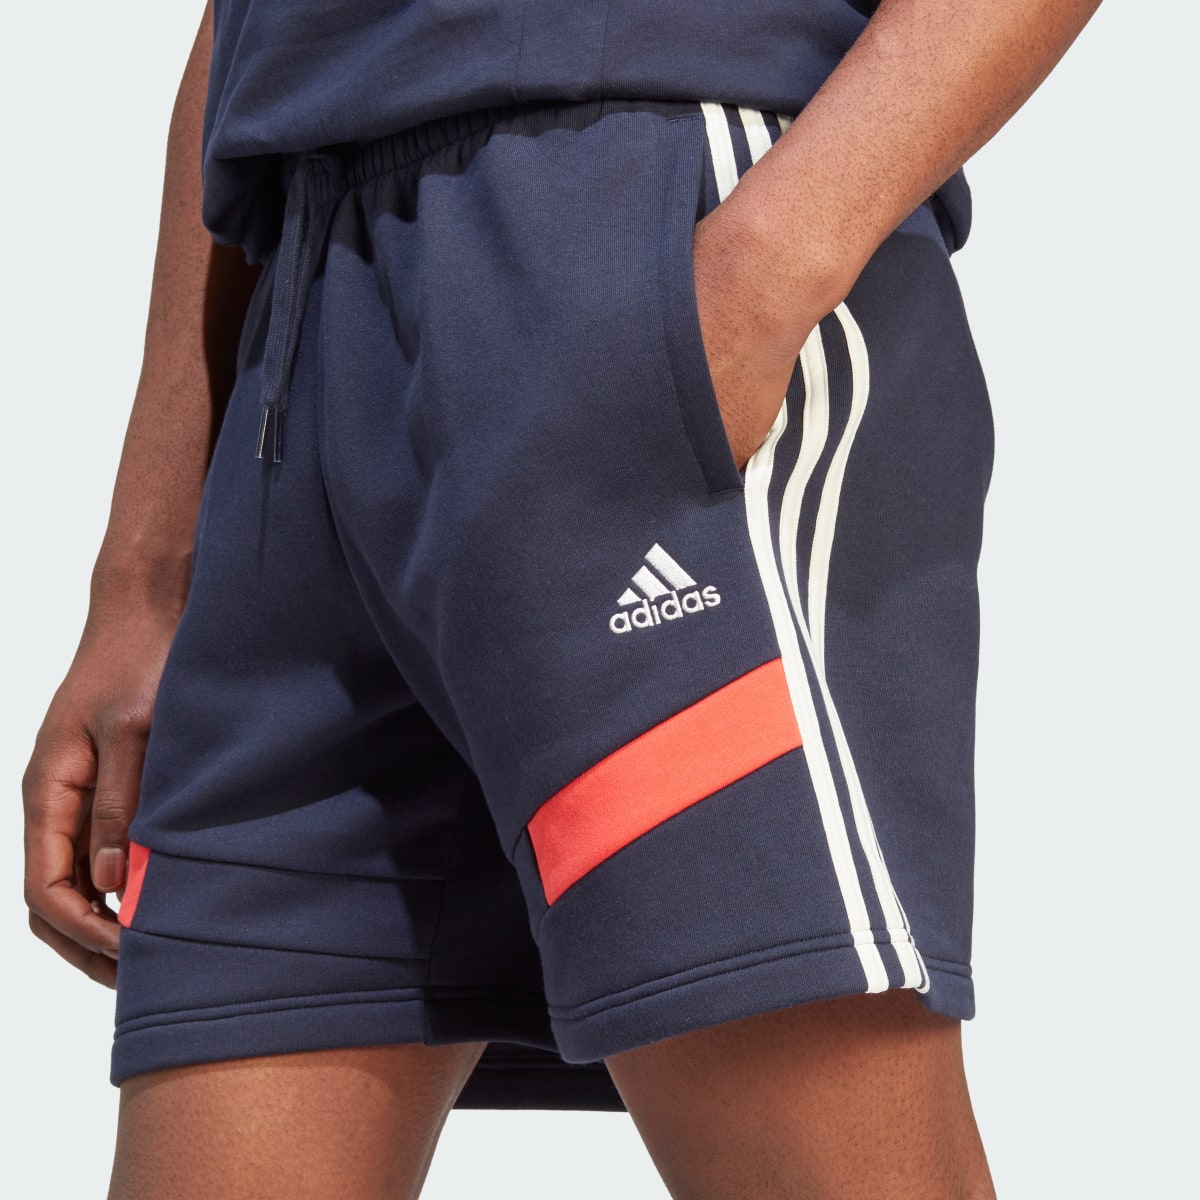 Adidas Colourblock Shorts. 5